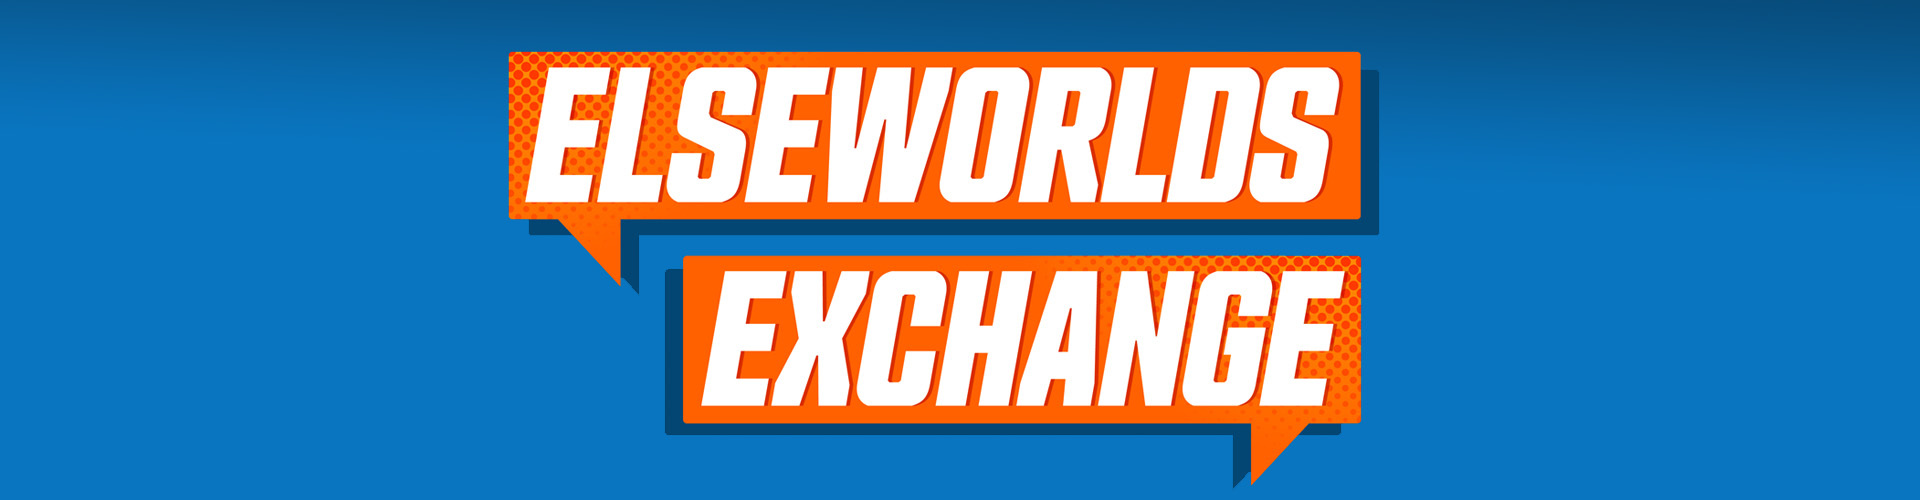 Elseworlds Exchange